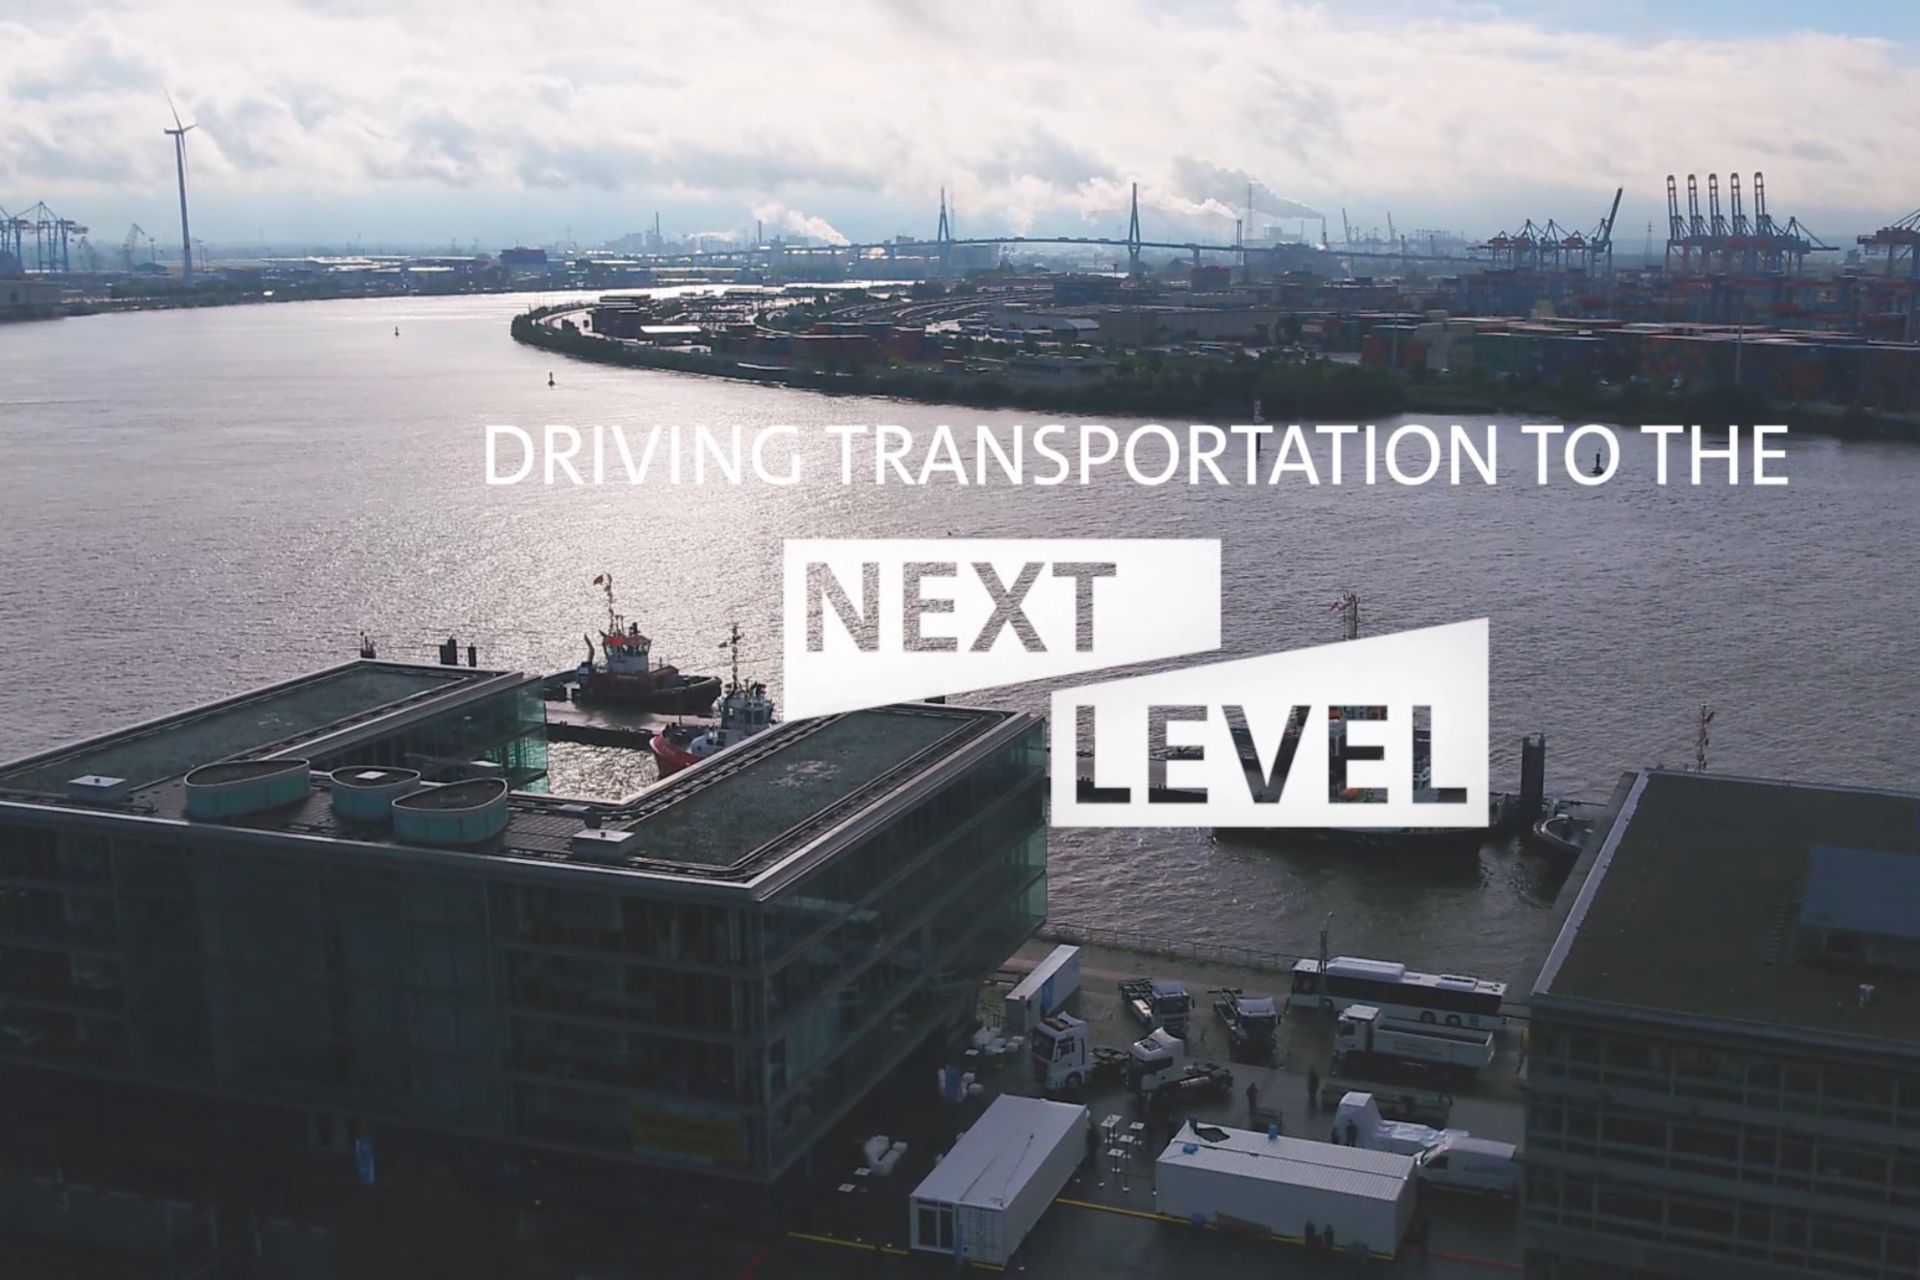 Text Driving transportation to the next level zum Image des Industriehafens 
                 